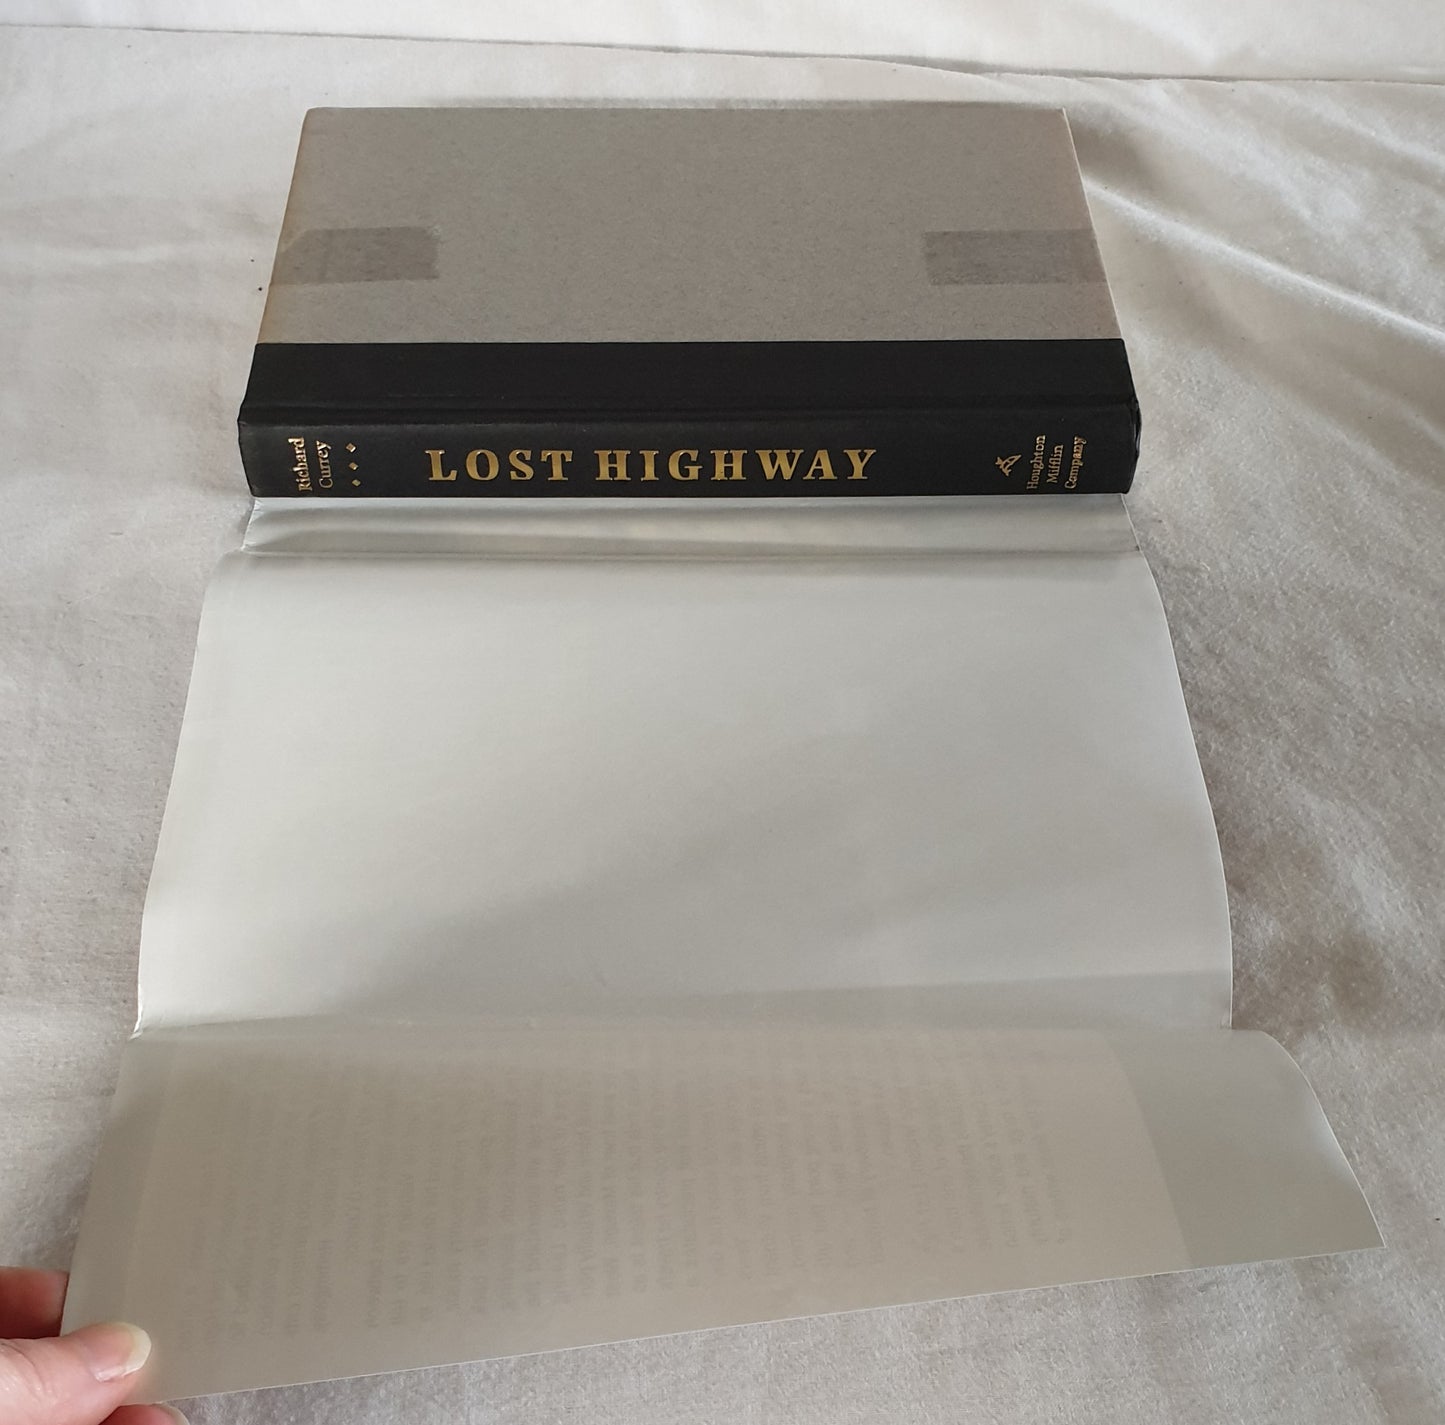 Lost Highway by Richard Currey